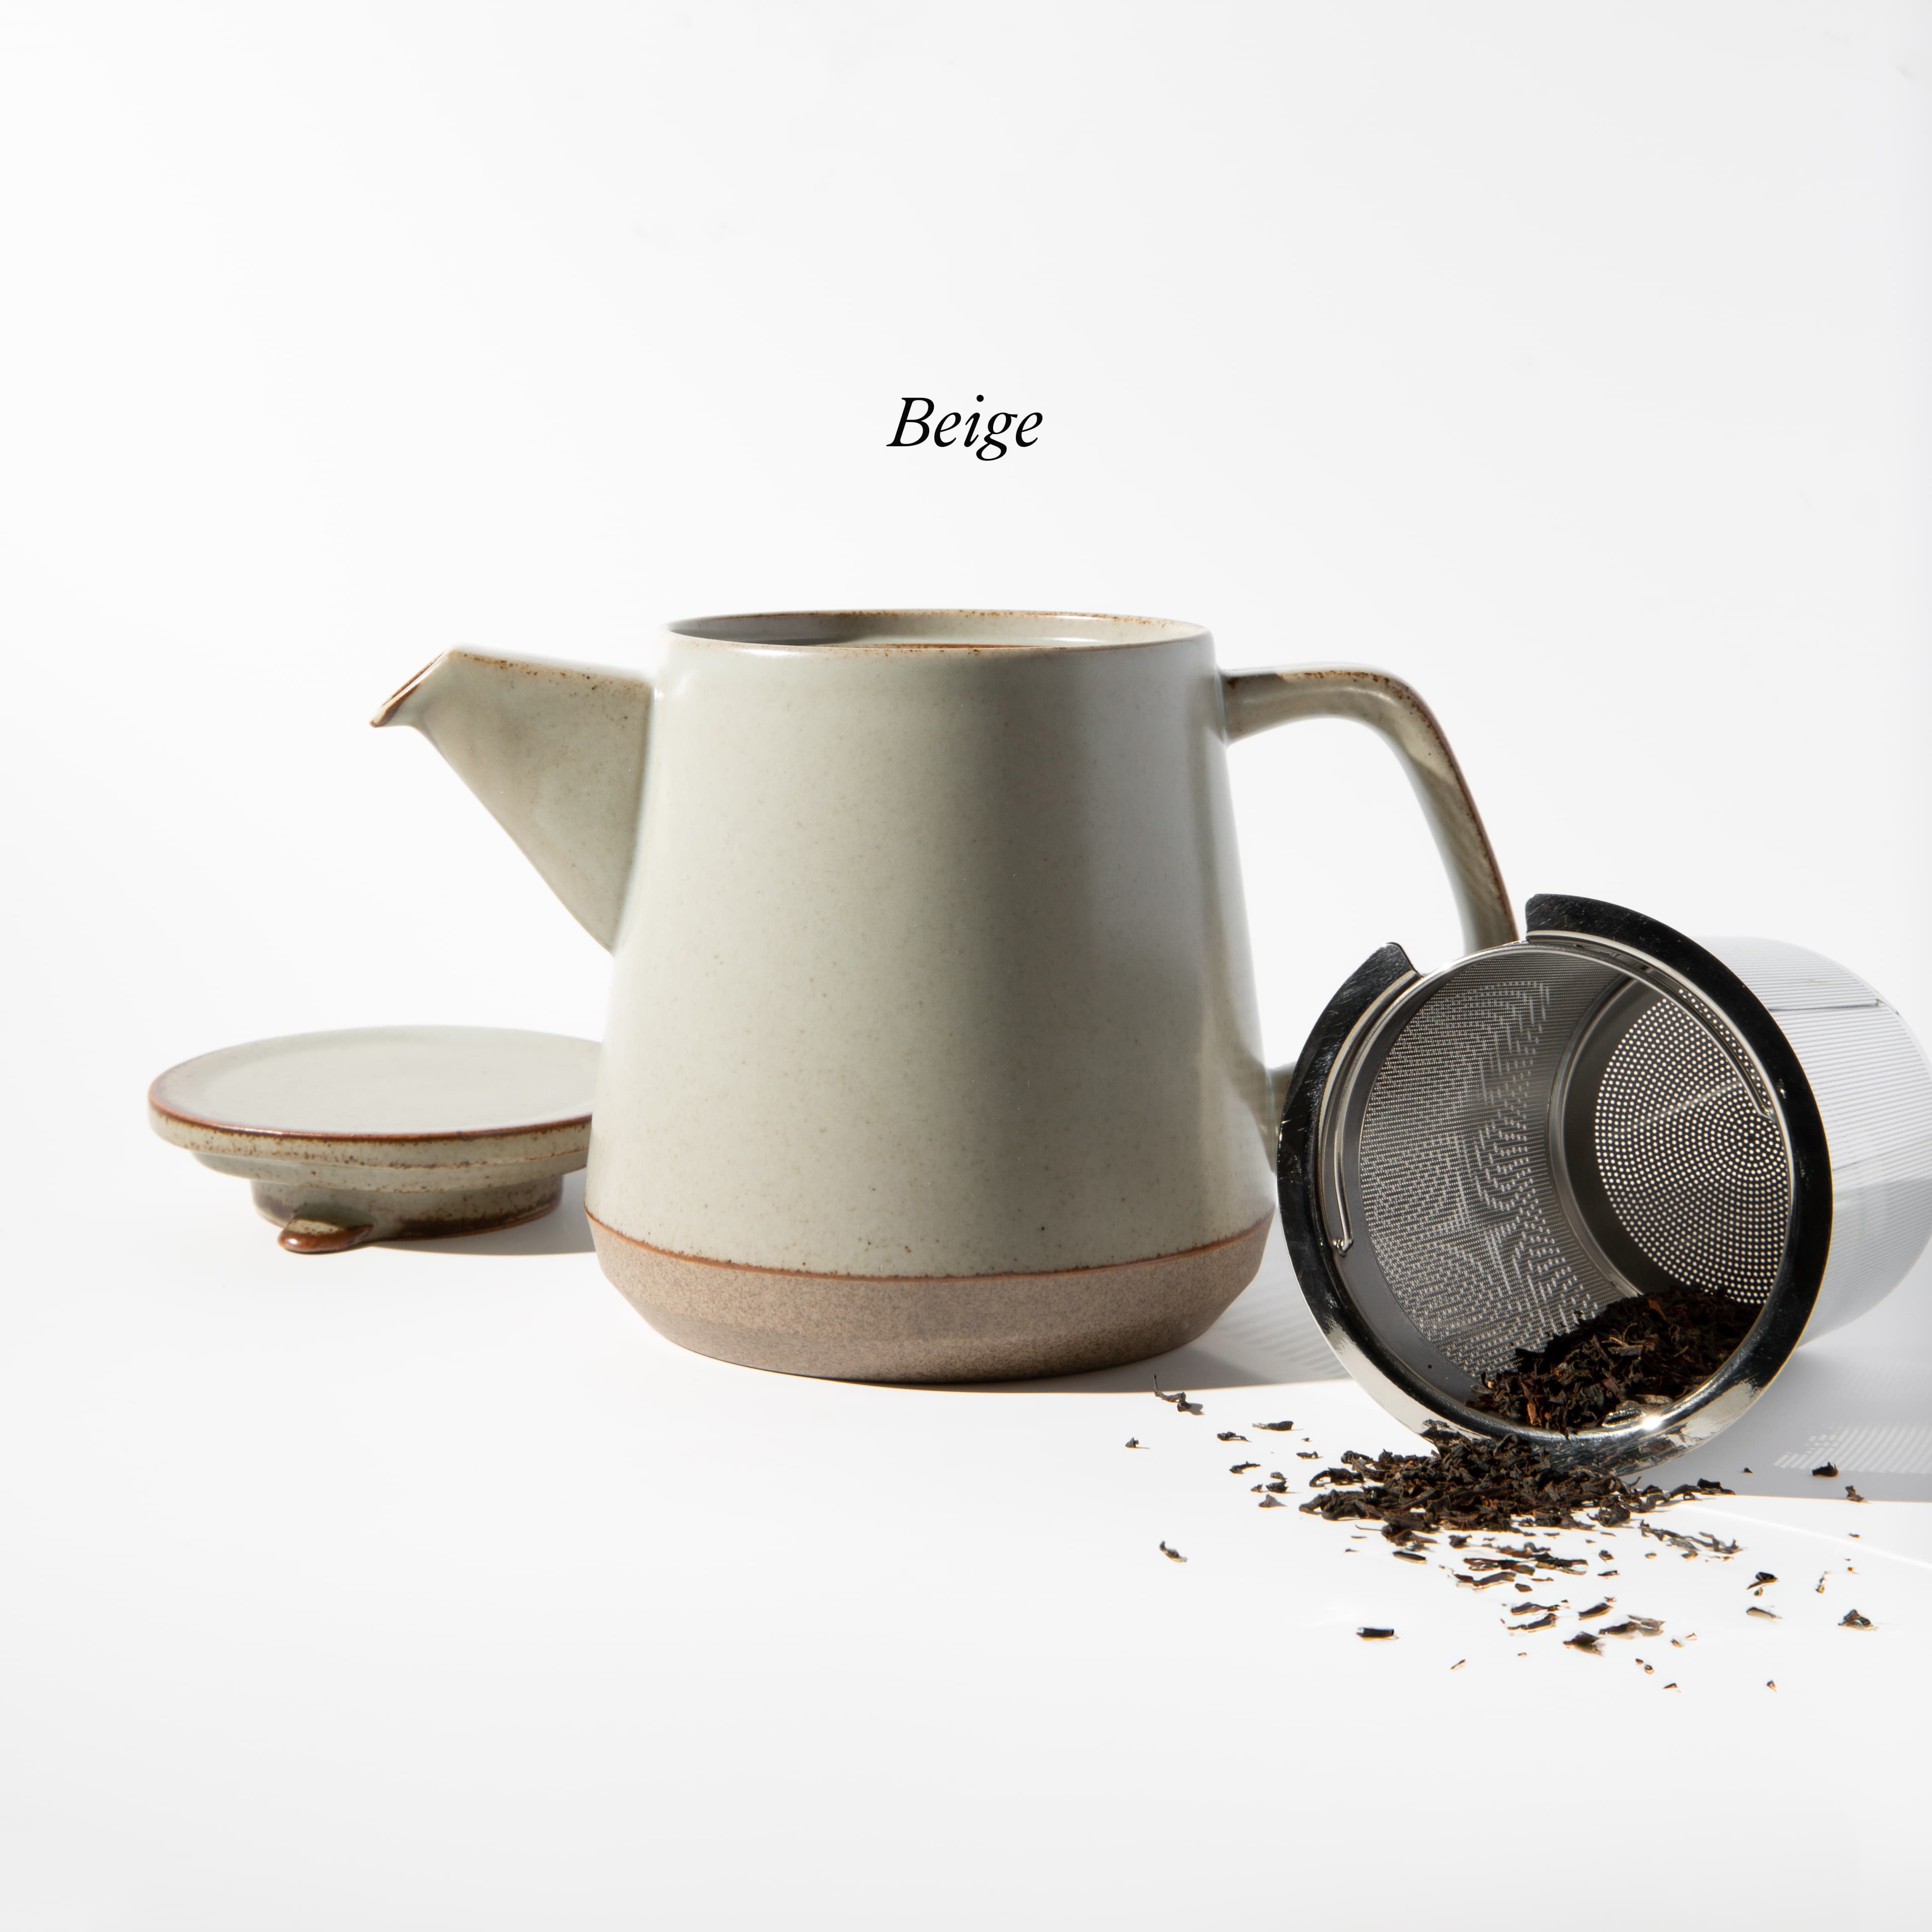 Beige ceramic Kinto tea pot with strainer